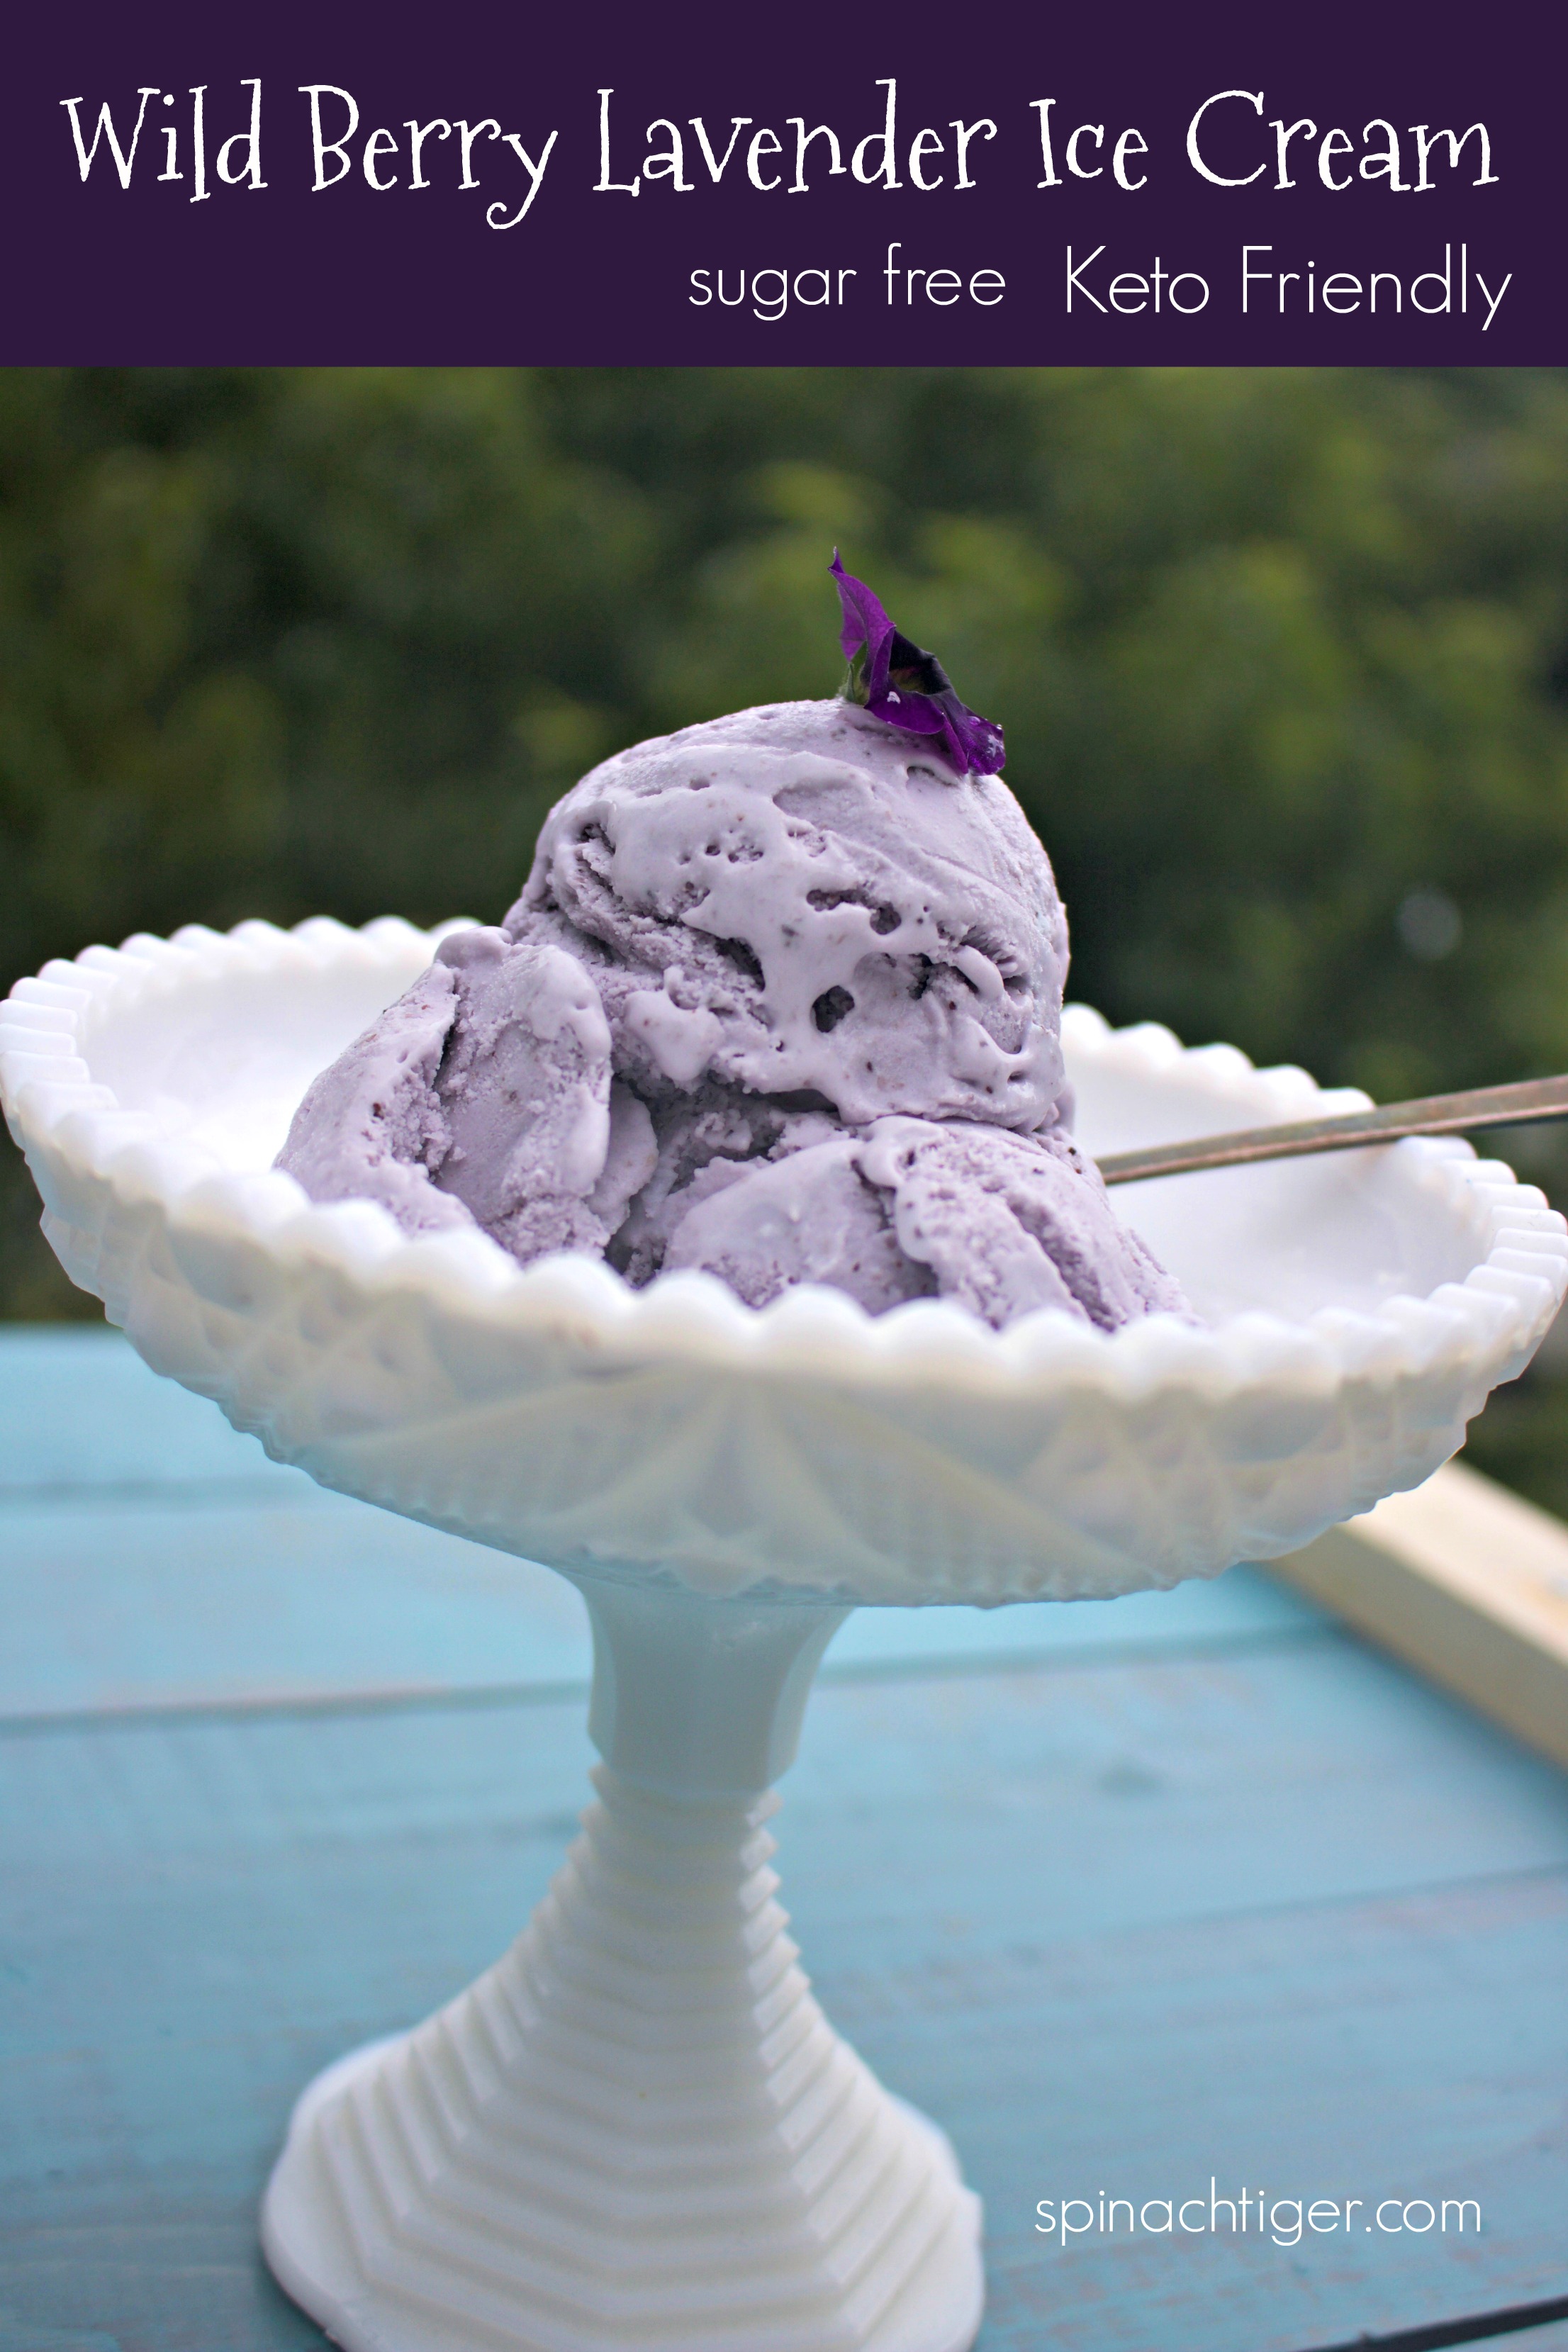 Homemade Lavender Blueberry Ice Cream Recipe from Spinach Tiger #icecream #blueberrydessert #blueberryicecream